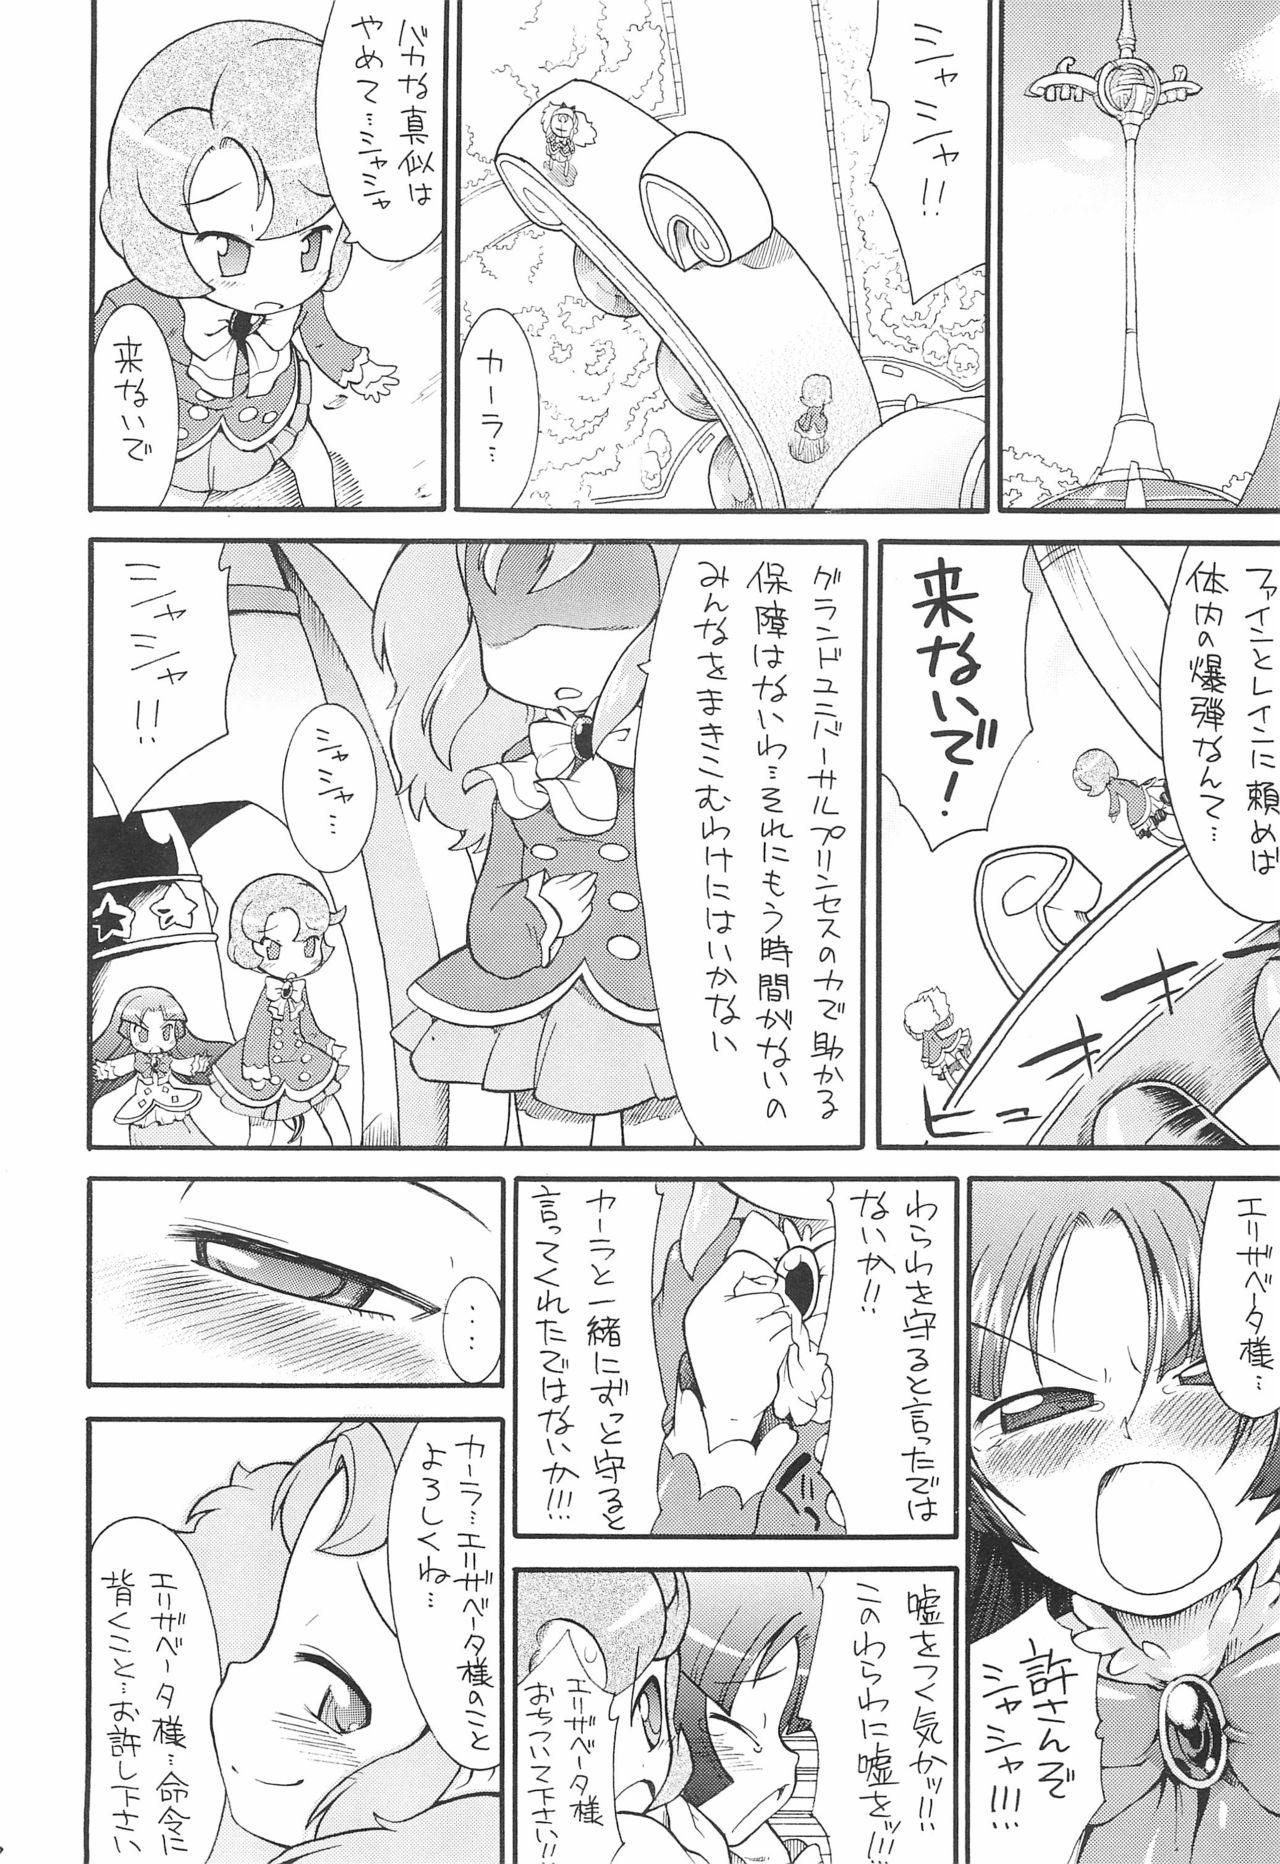 Realamateur Kodomo ja Neenda Princess nanda! 6 - Fushigiboshi no futagohime | twin princesses of the wonder planet Deep Throat - Page 6